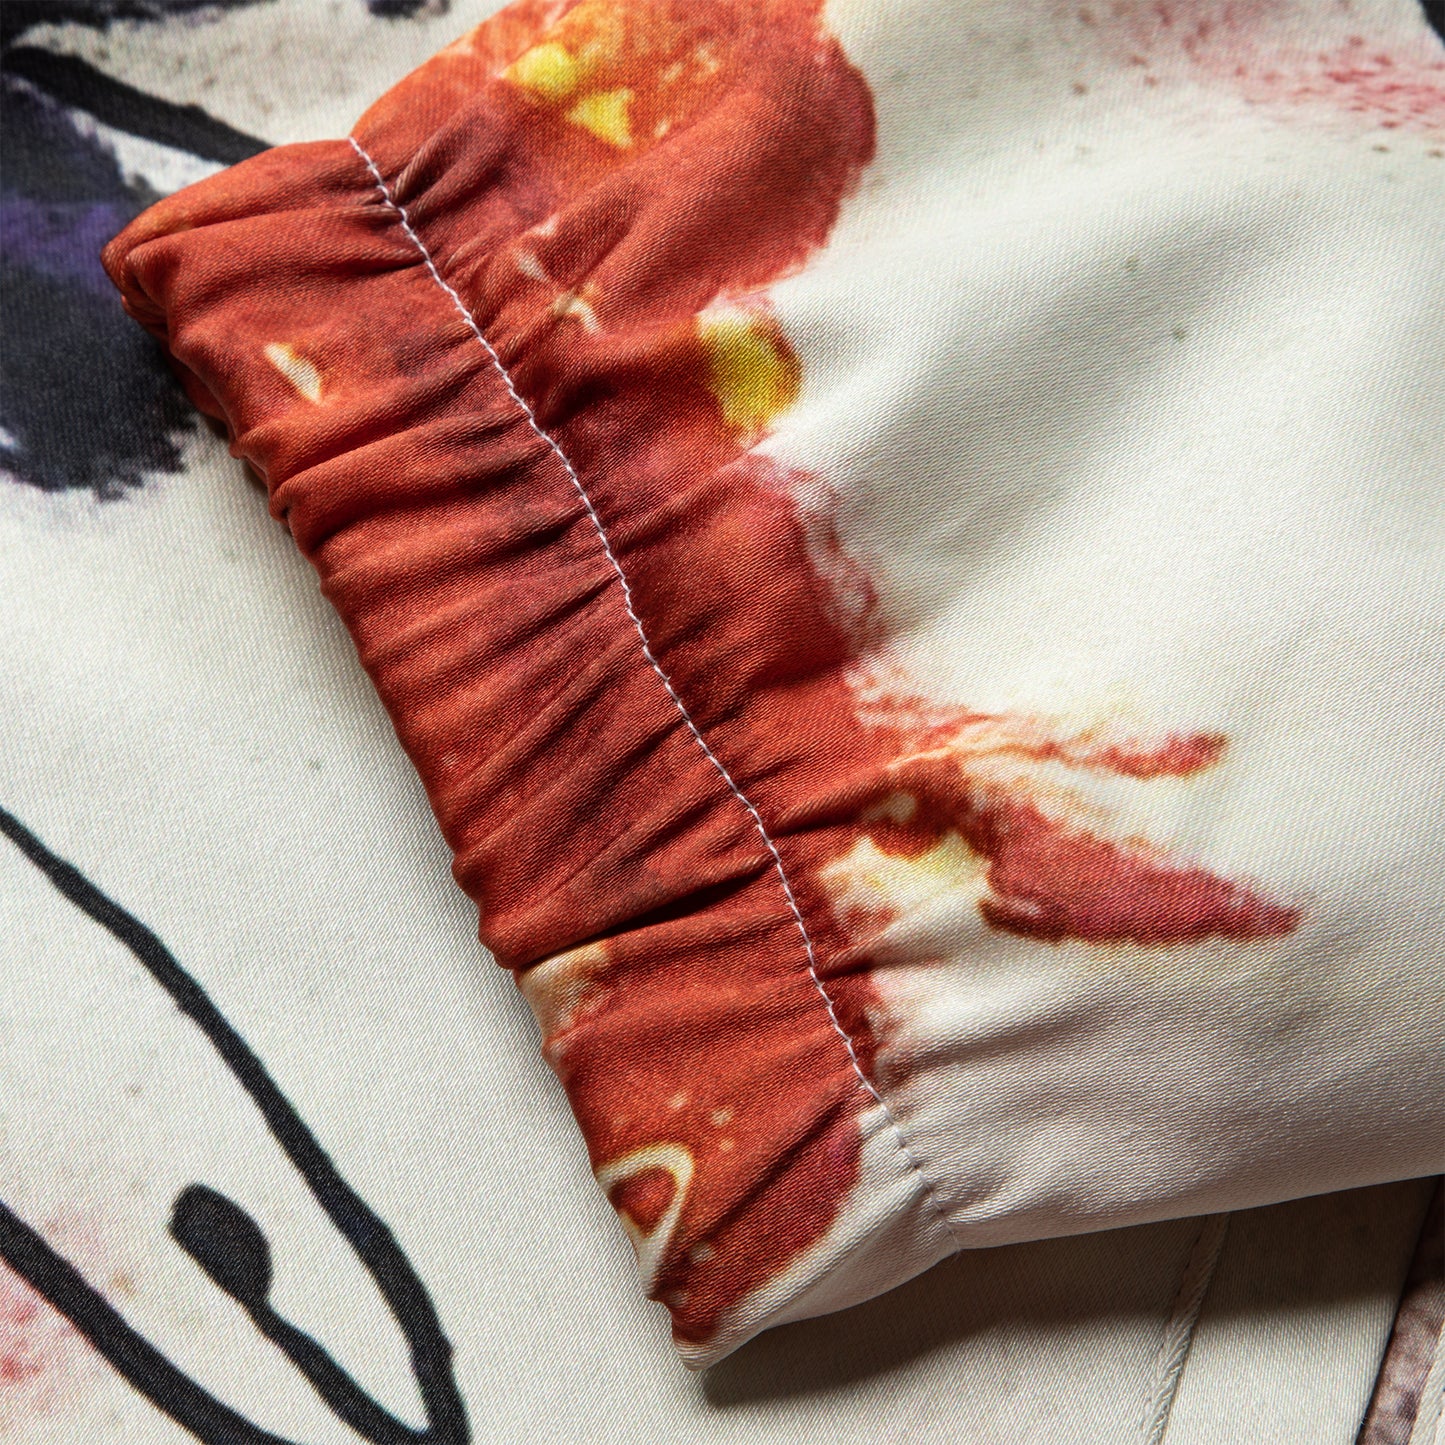 Concepts x Salvador Dali 'The Lobster Quadrille' Coaches Jacket (Multi)